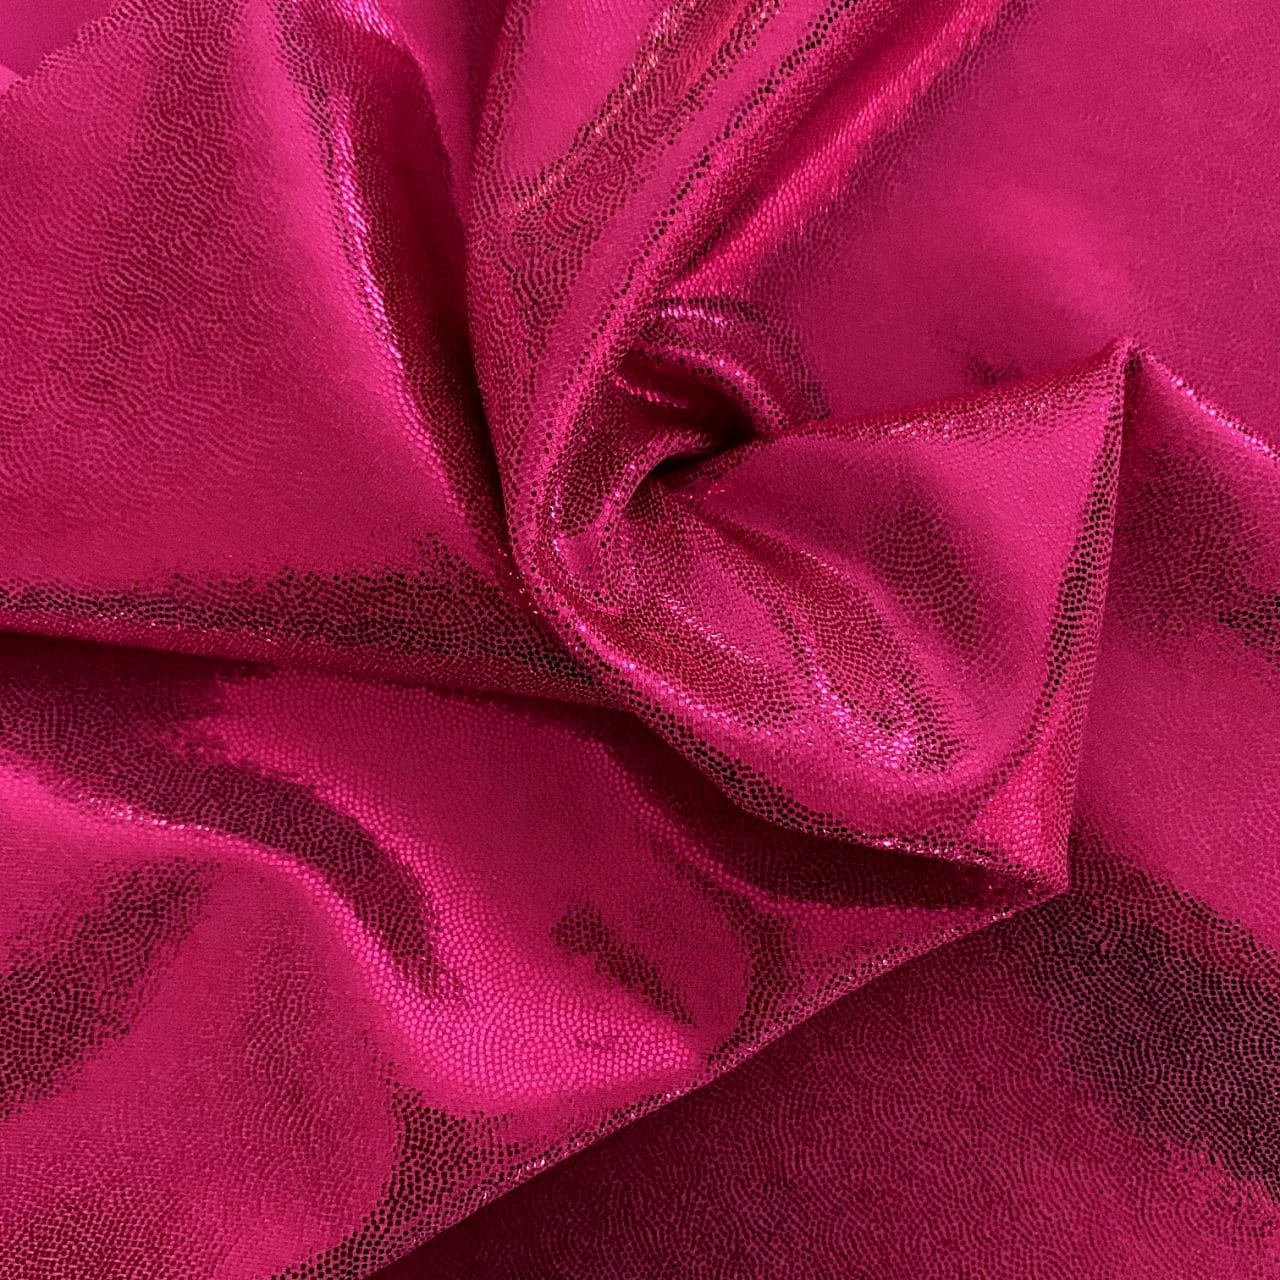 https://www.solidstonefabrics.com/wp-content/uploads/2018/06/Metallic-Sheen-Fuchsia-Berry-Main-Solid-Stone-Fabrics-Inc.-Stretch-Fabrics-By-The-Yard.jpg